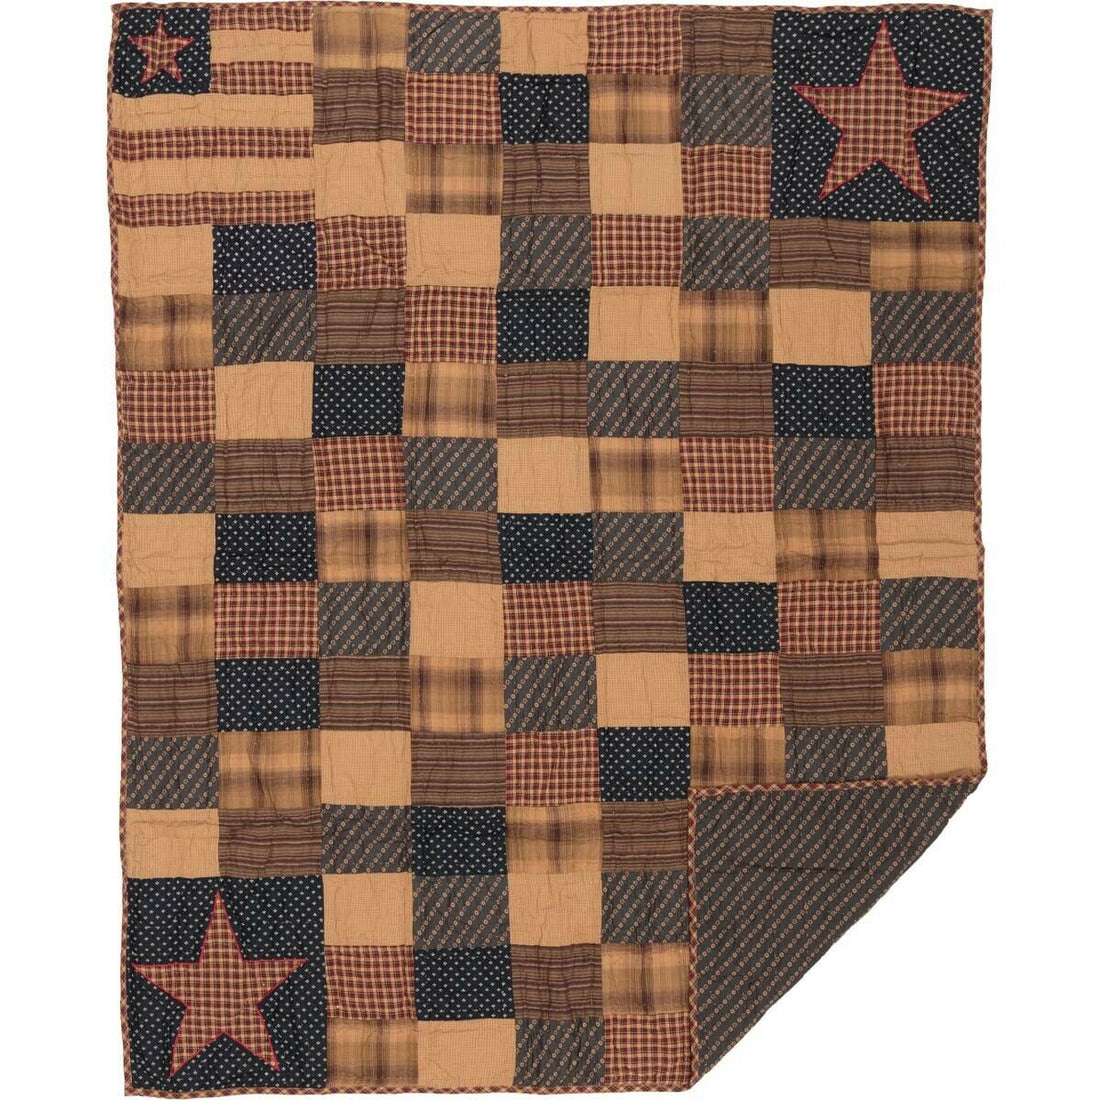 Primitive/Farmhouse 60&quot;x50” Patriotic Patchwork Hanging quilt Throw - The Primitive Pineapple Collection